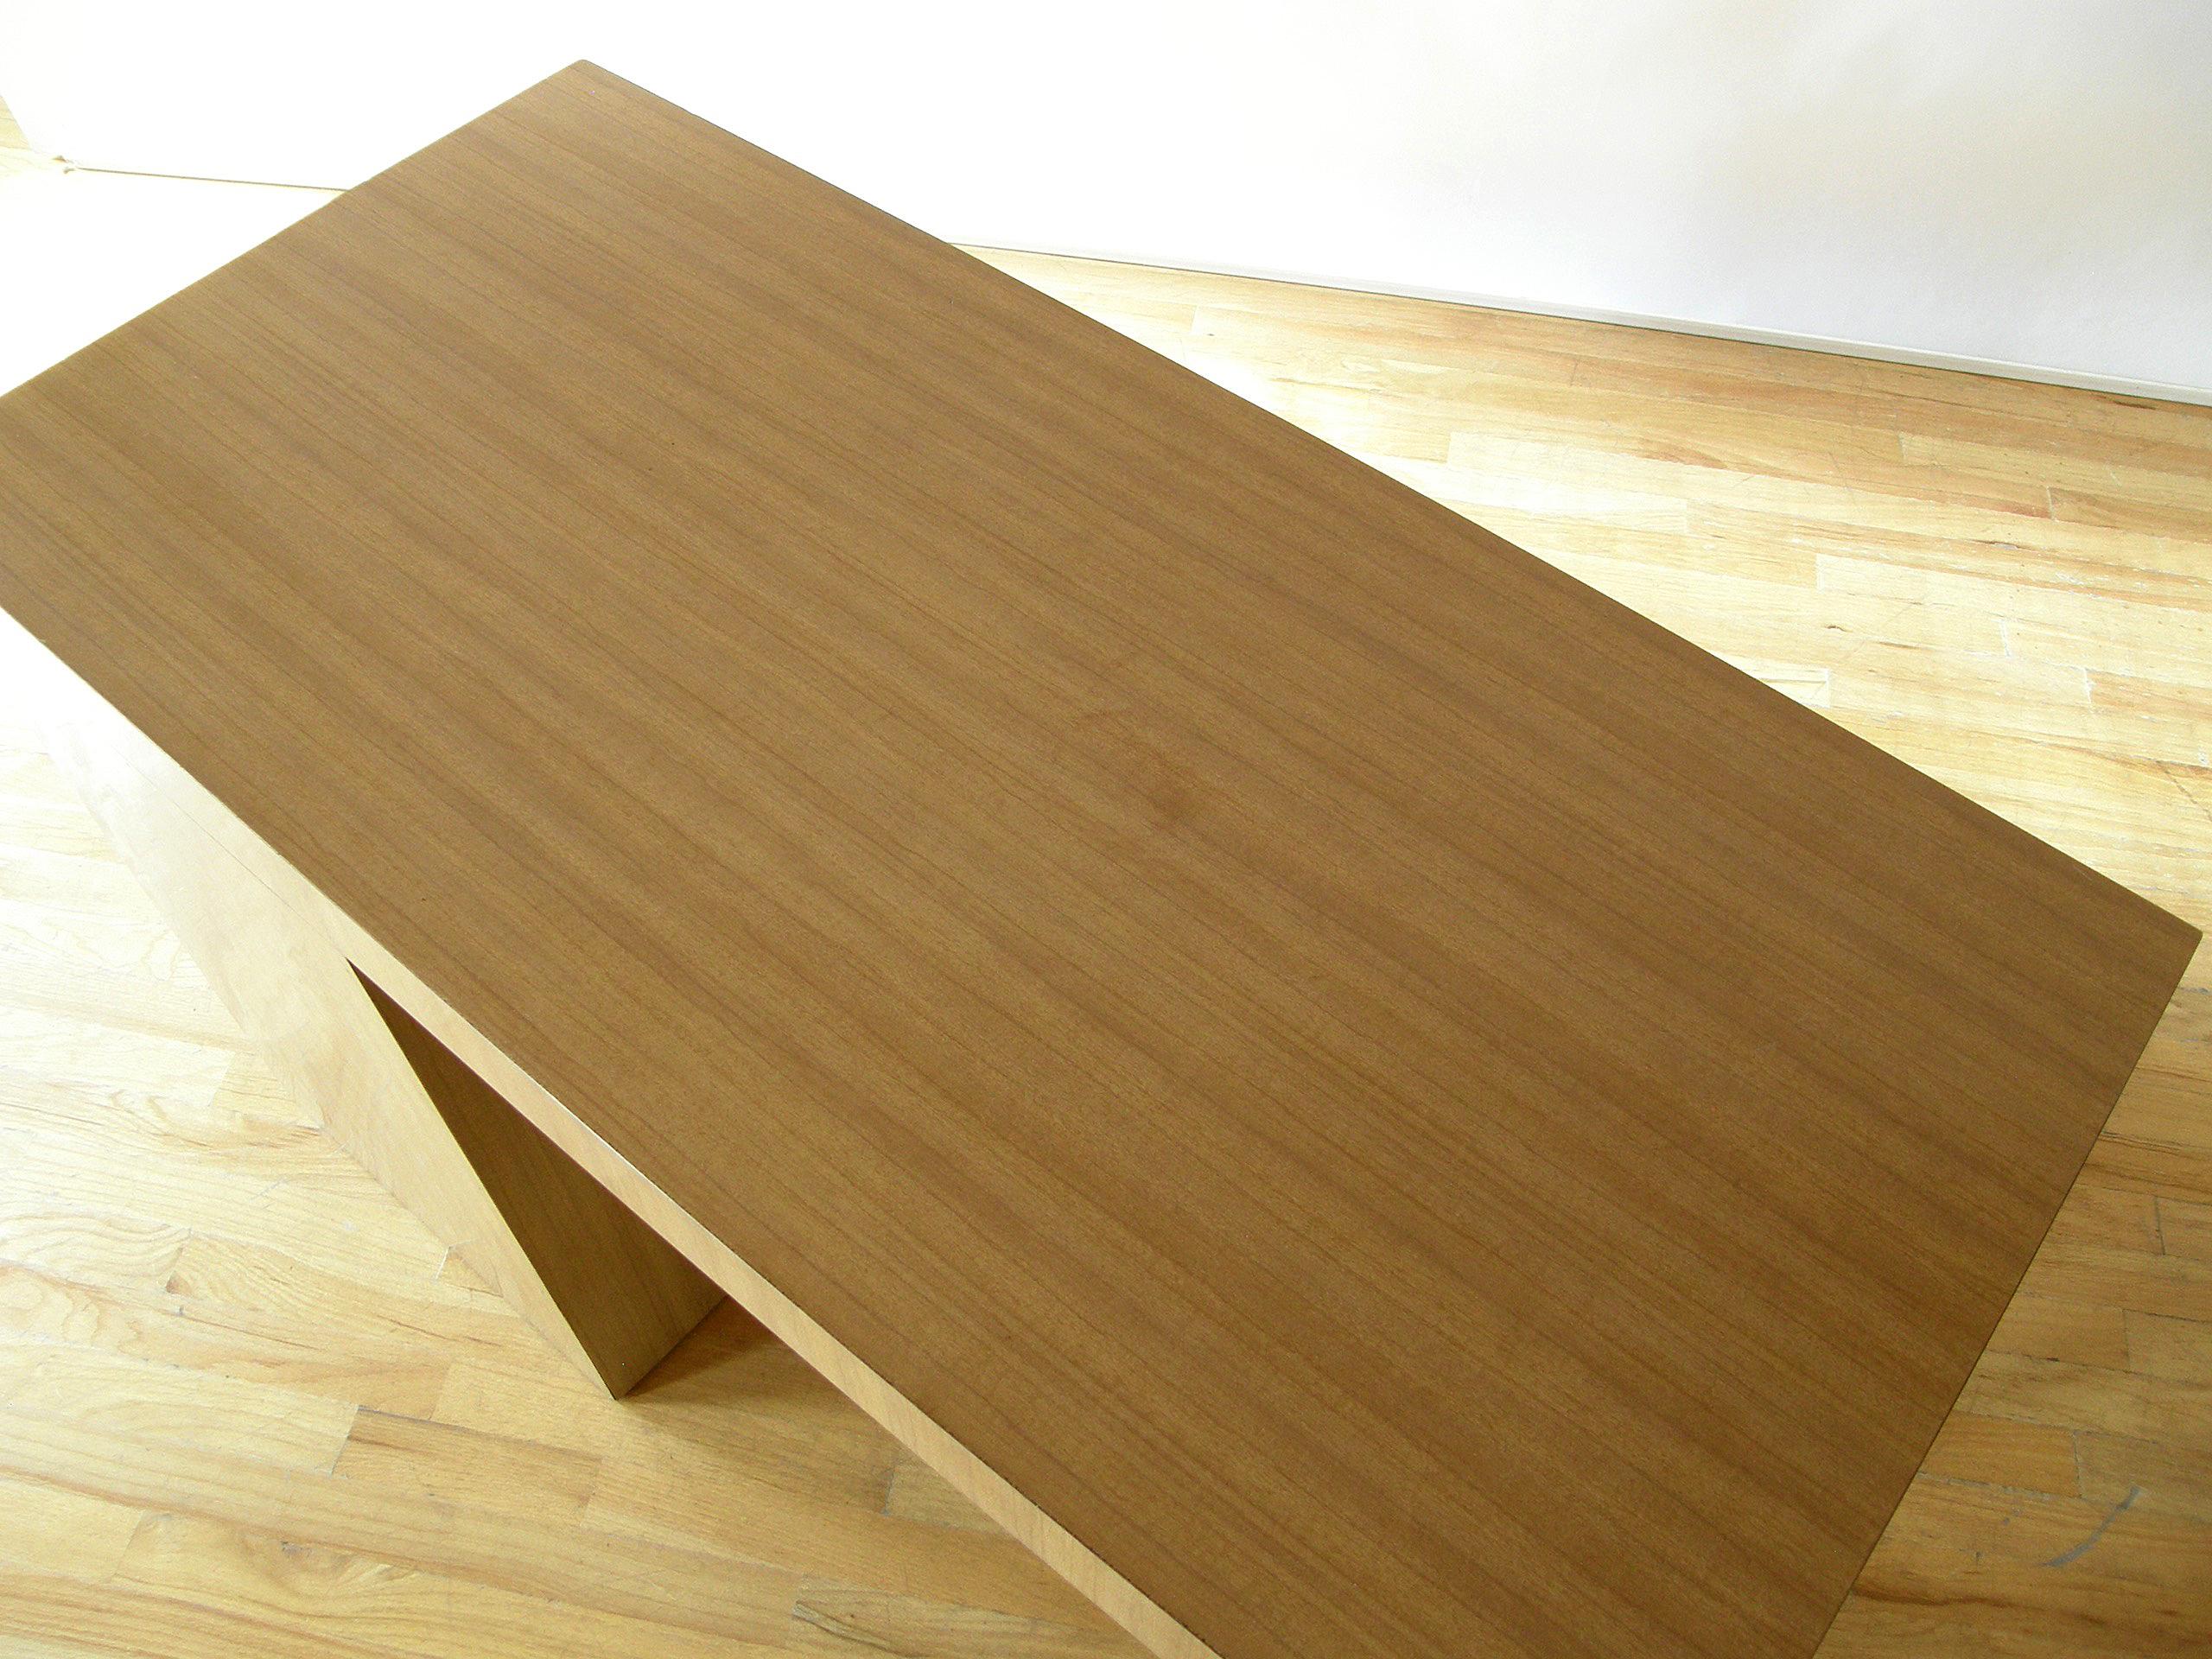 Woven Petite Desk with Cane Handles Designed by T. H. Robsjohn-Gibbings for Widdicomb